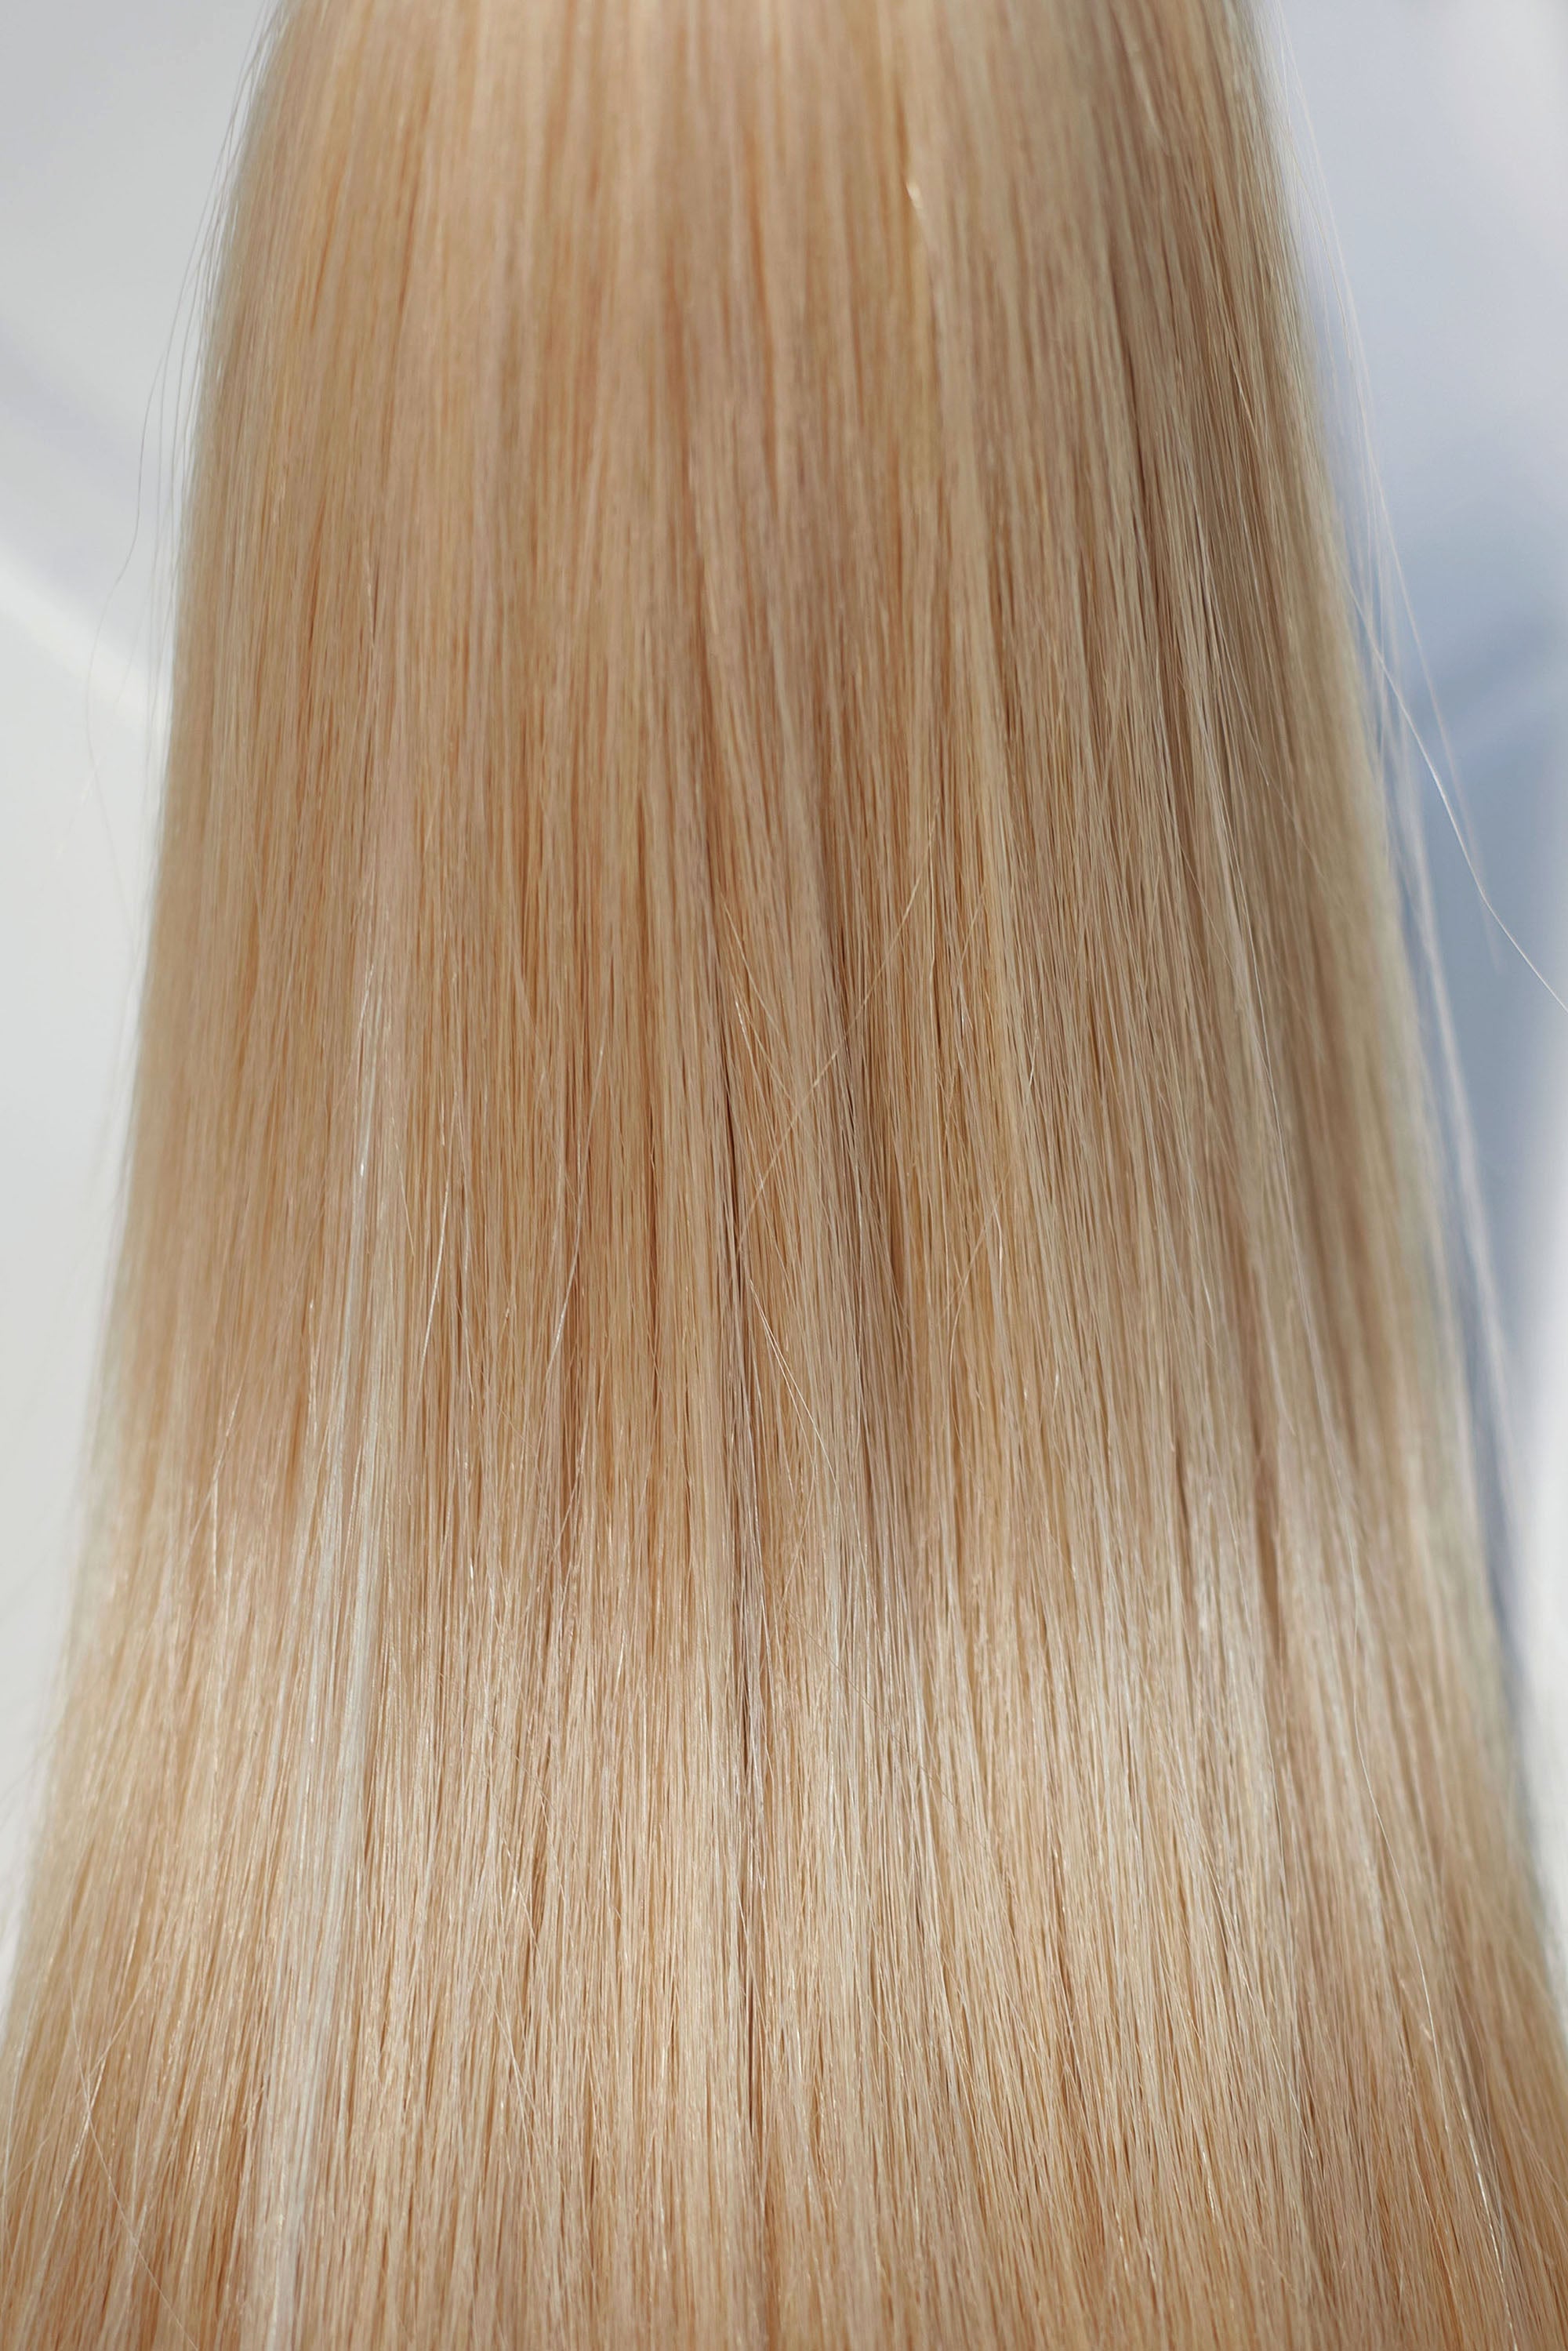 Behair professional Keratin Tip "Premium" 16" (40cm) Natural Straight Light Gold Blond #24 - 25g (1g each pcs) hair extensions